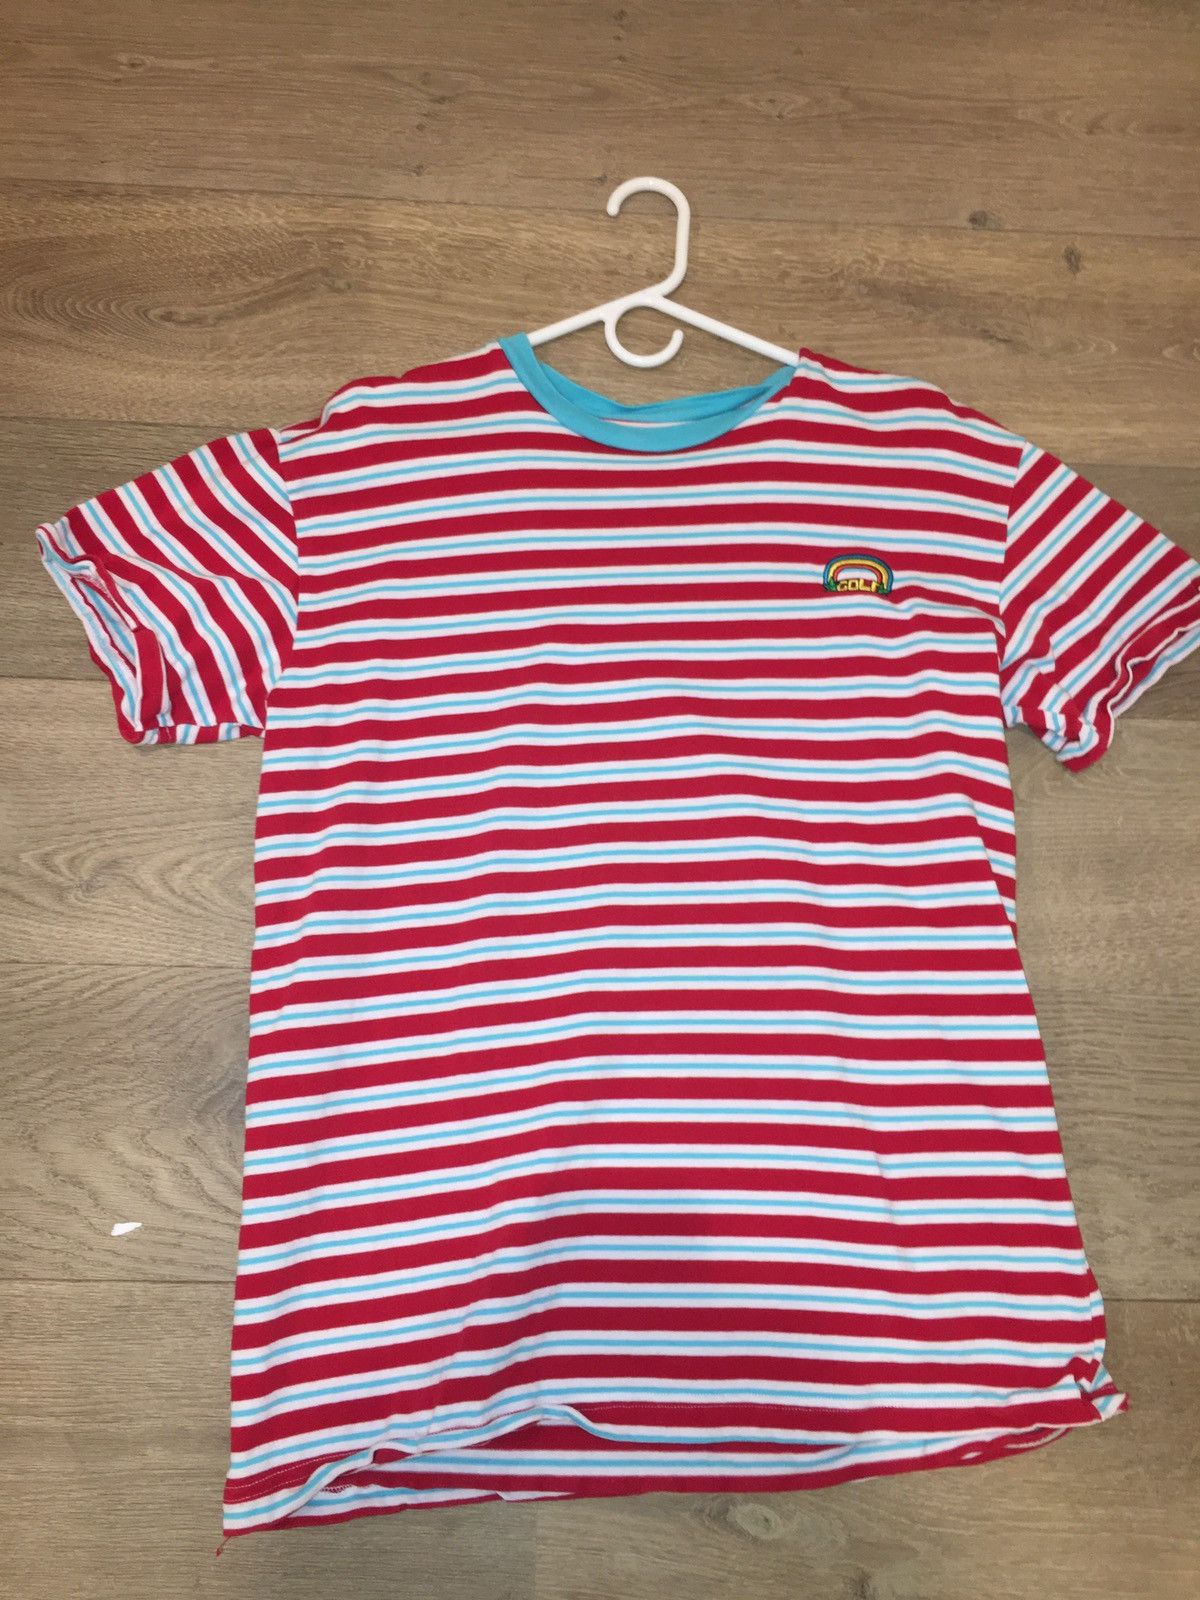 Golf Wang Red Striped Shirt Size US M / EU 48-50 / 2 - 1 Preview